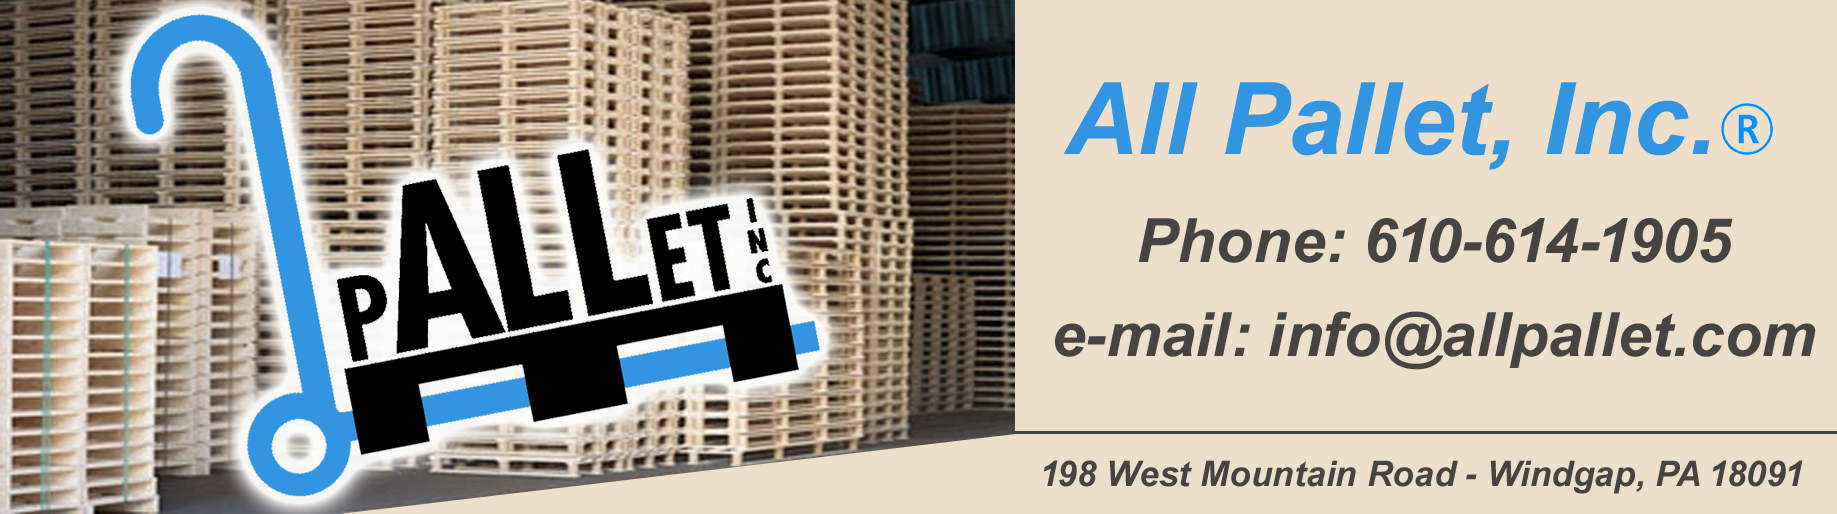 All Pallet, Inc. - Windgap, PA